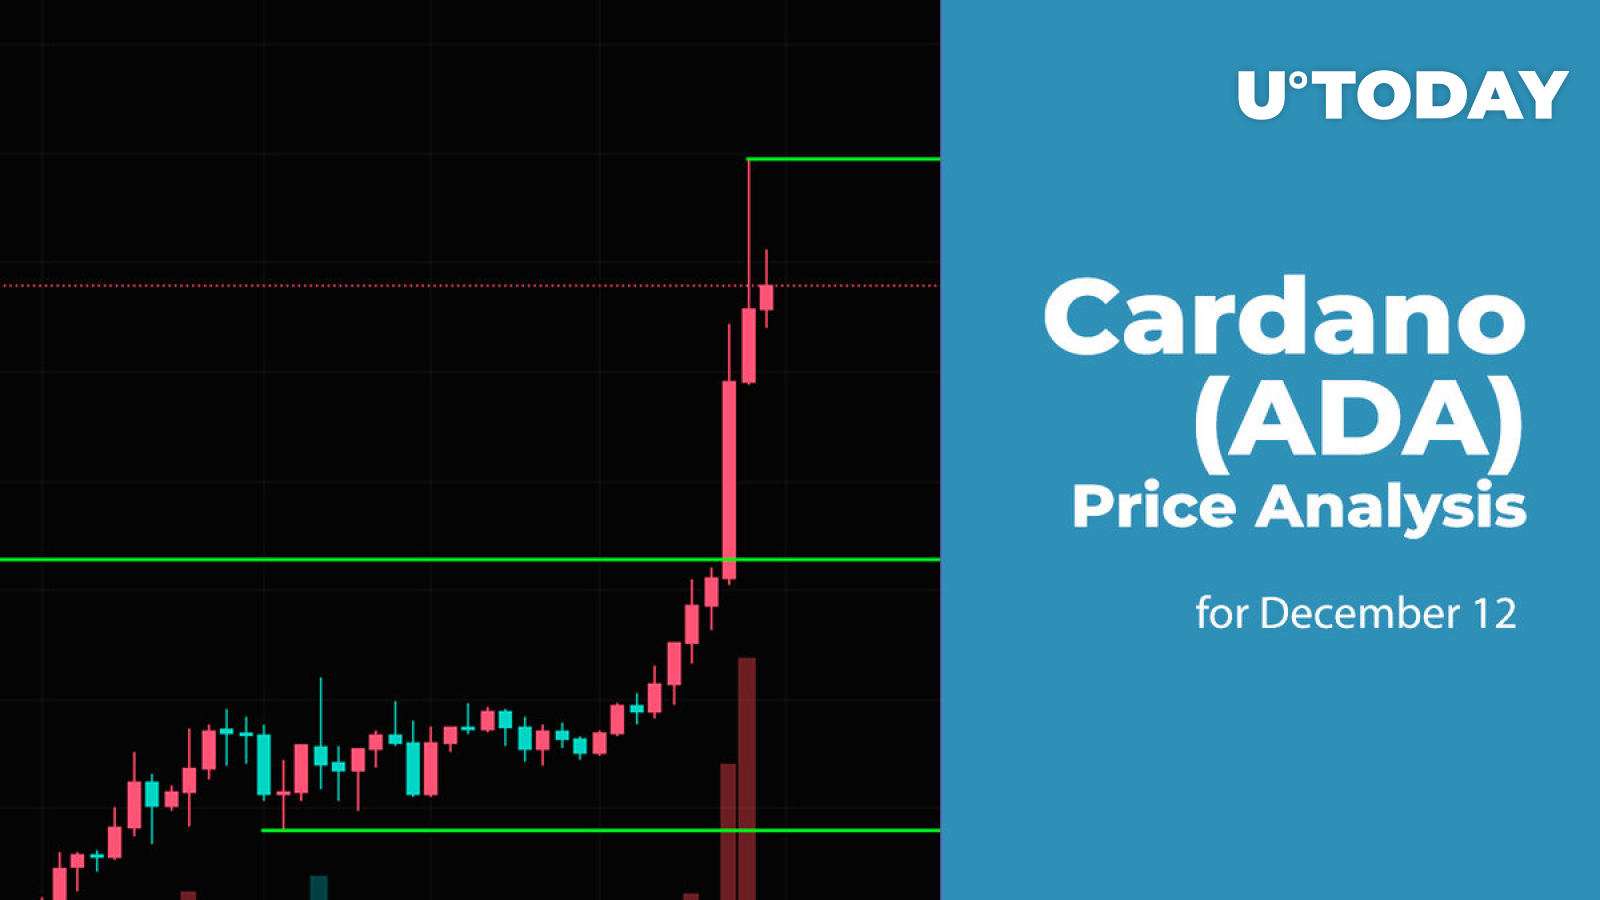 Cardano (ADA) Price Analysis for December 12